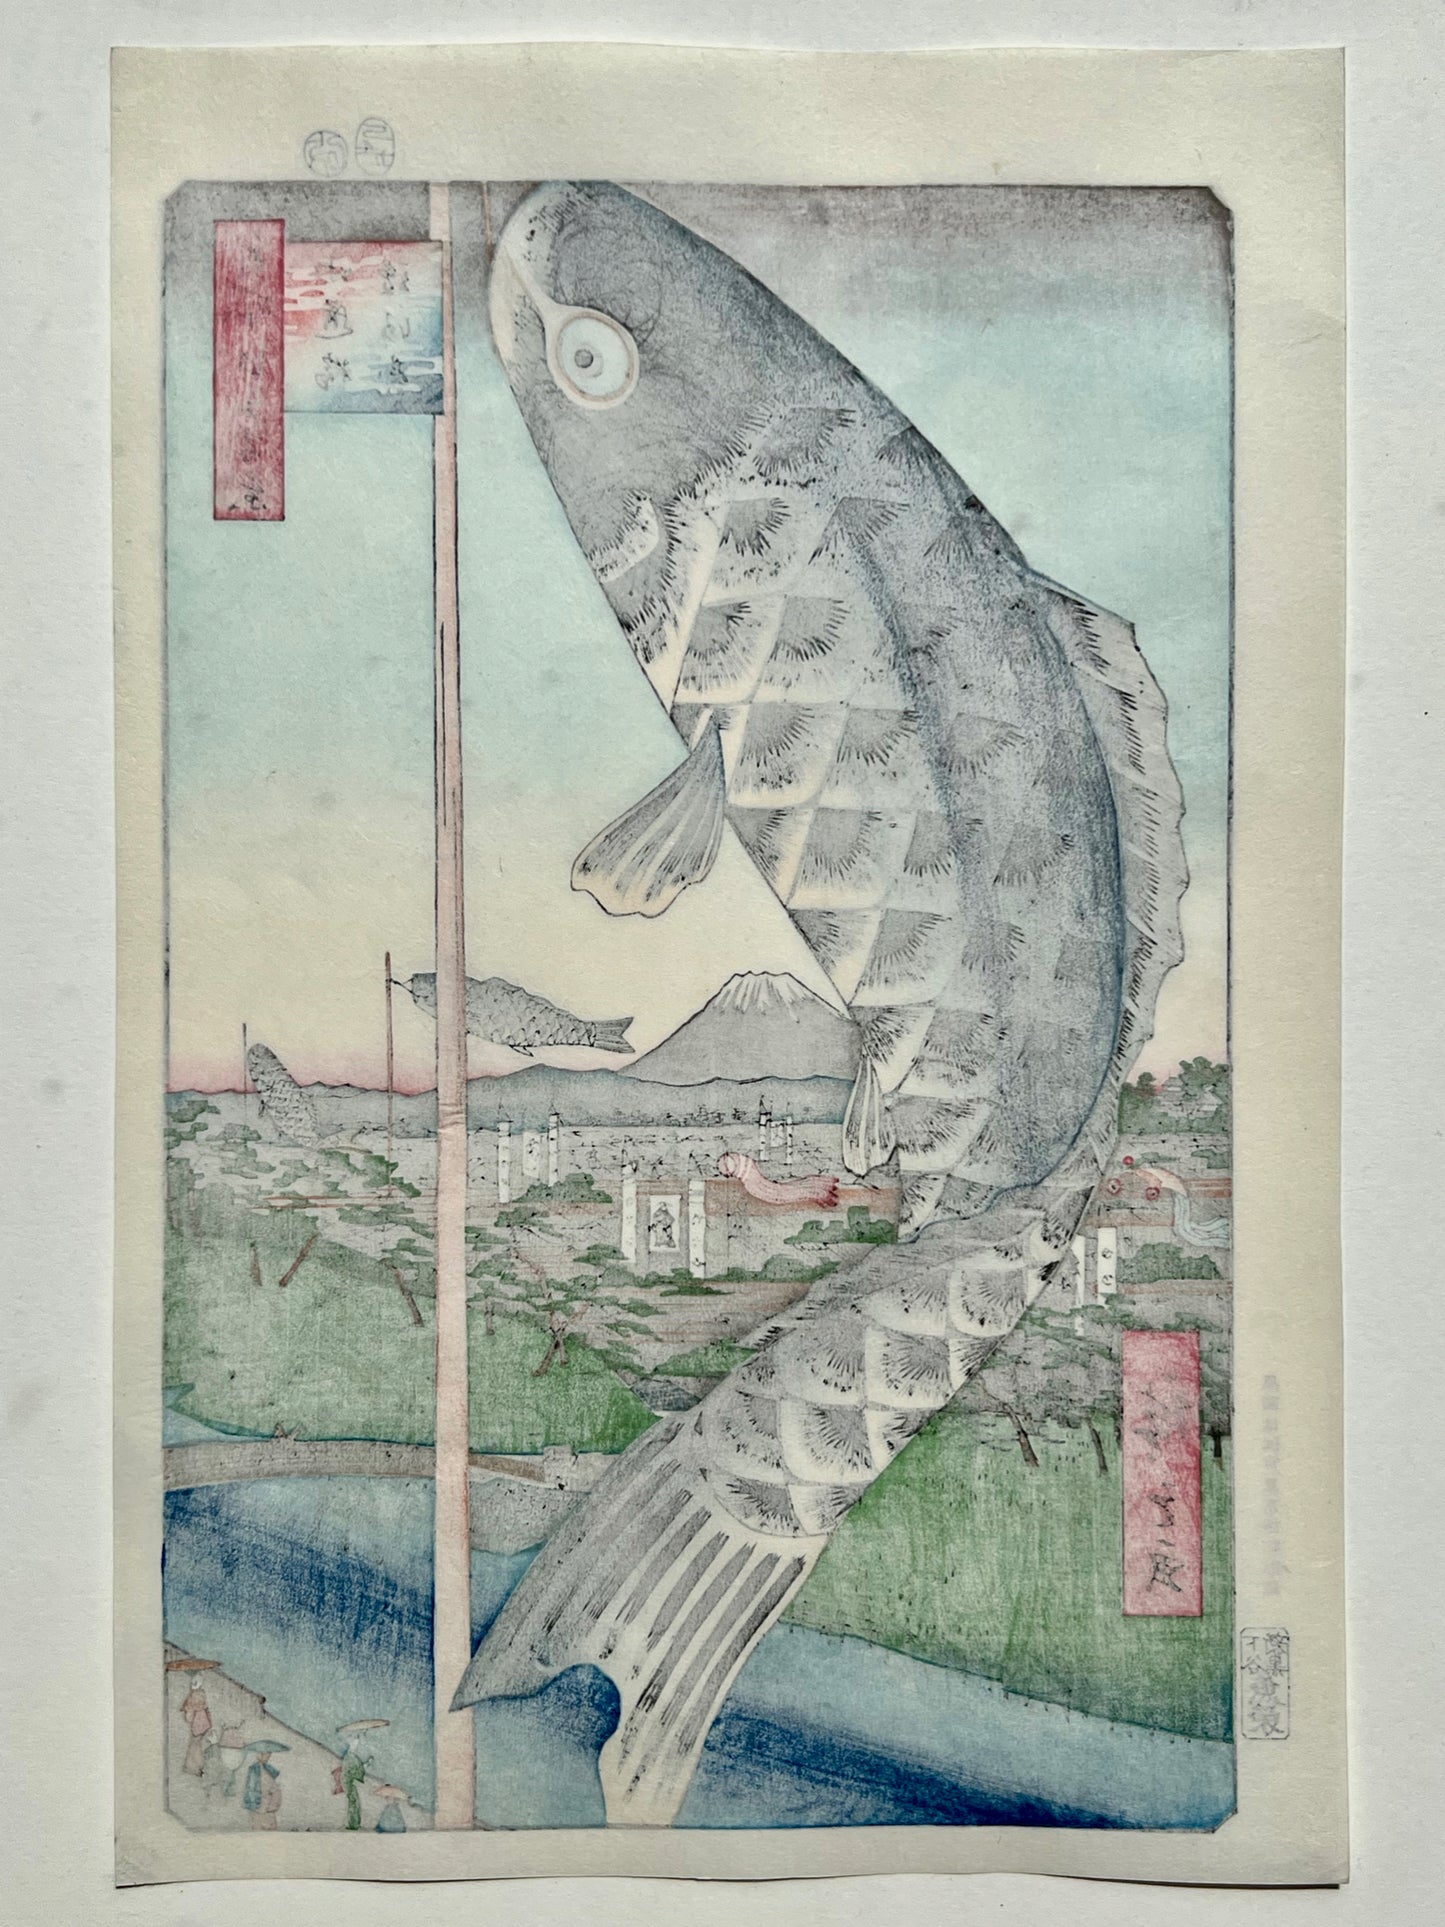     hiroshige-serie-100-vues-edo-suidobashi-koinobori-hi23-01  1536 × 2048 px  estampe japonaise carpe koi en banniere, dos de l'estampe